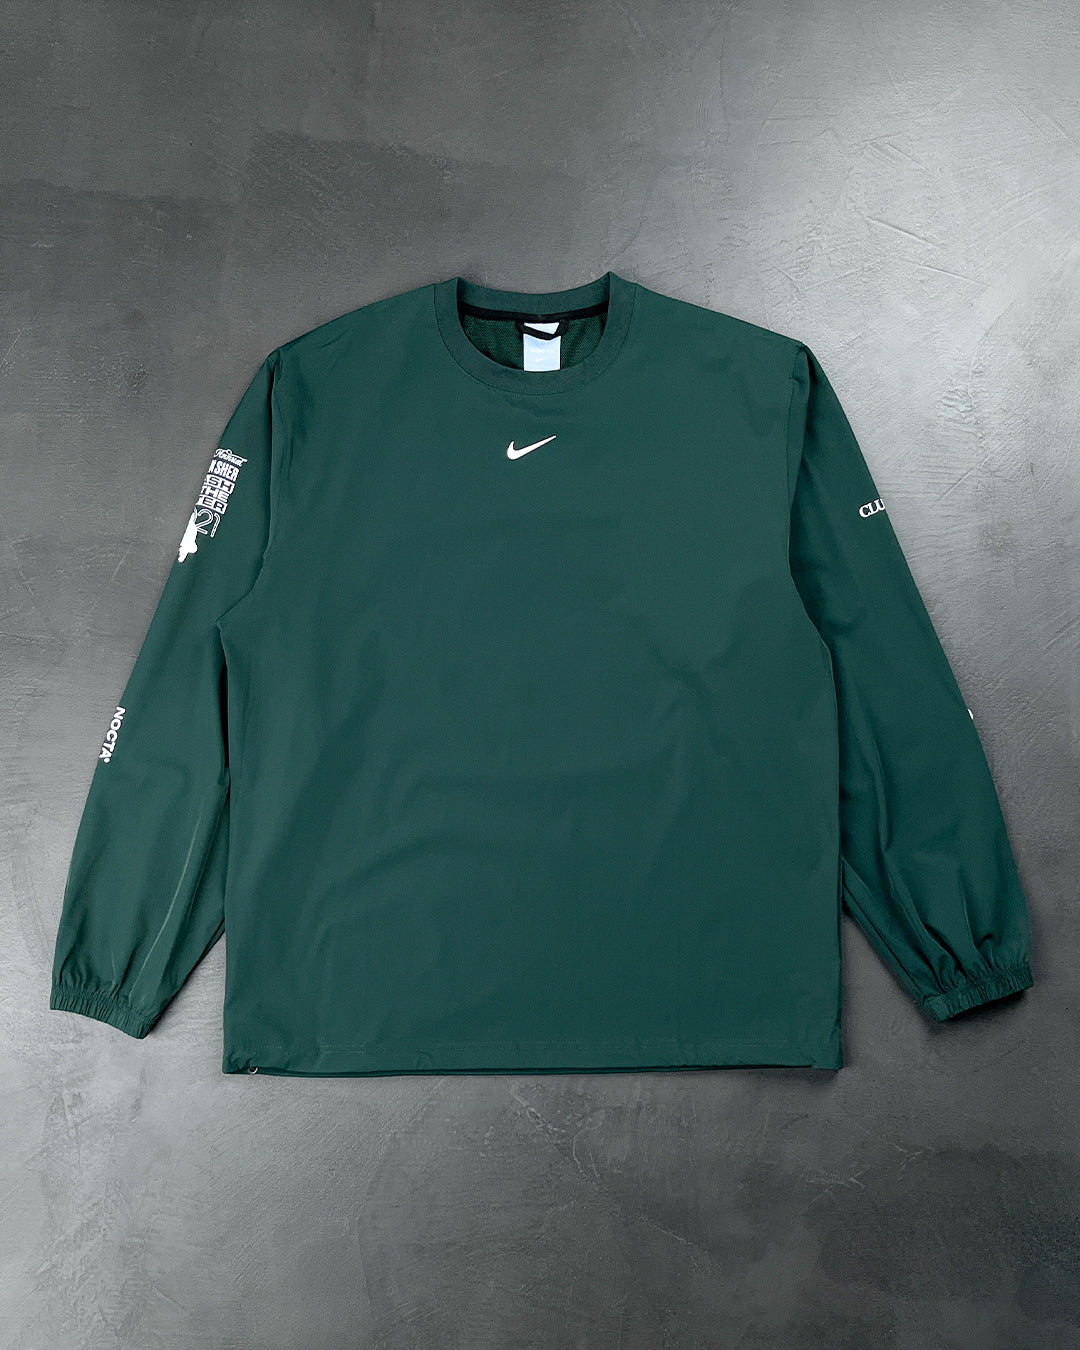 Nike x Drake NOCTA Golf Crewneck Top Green